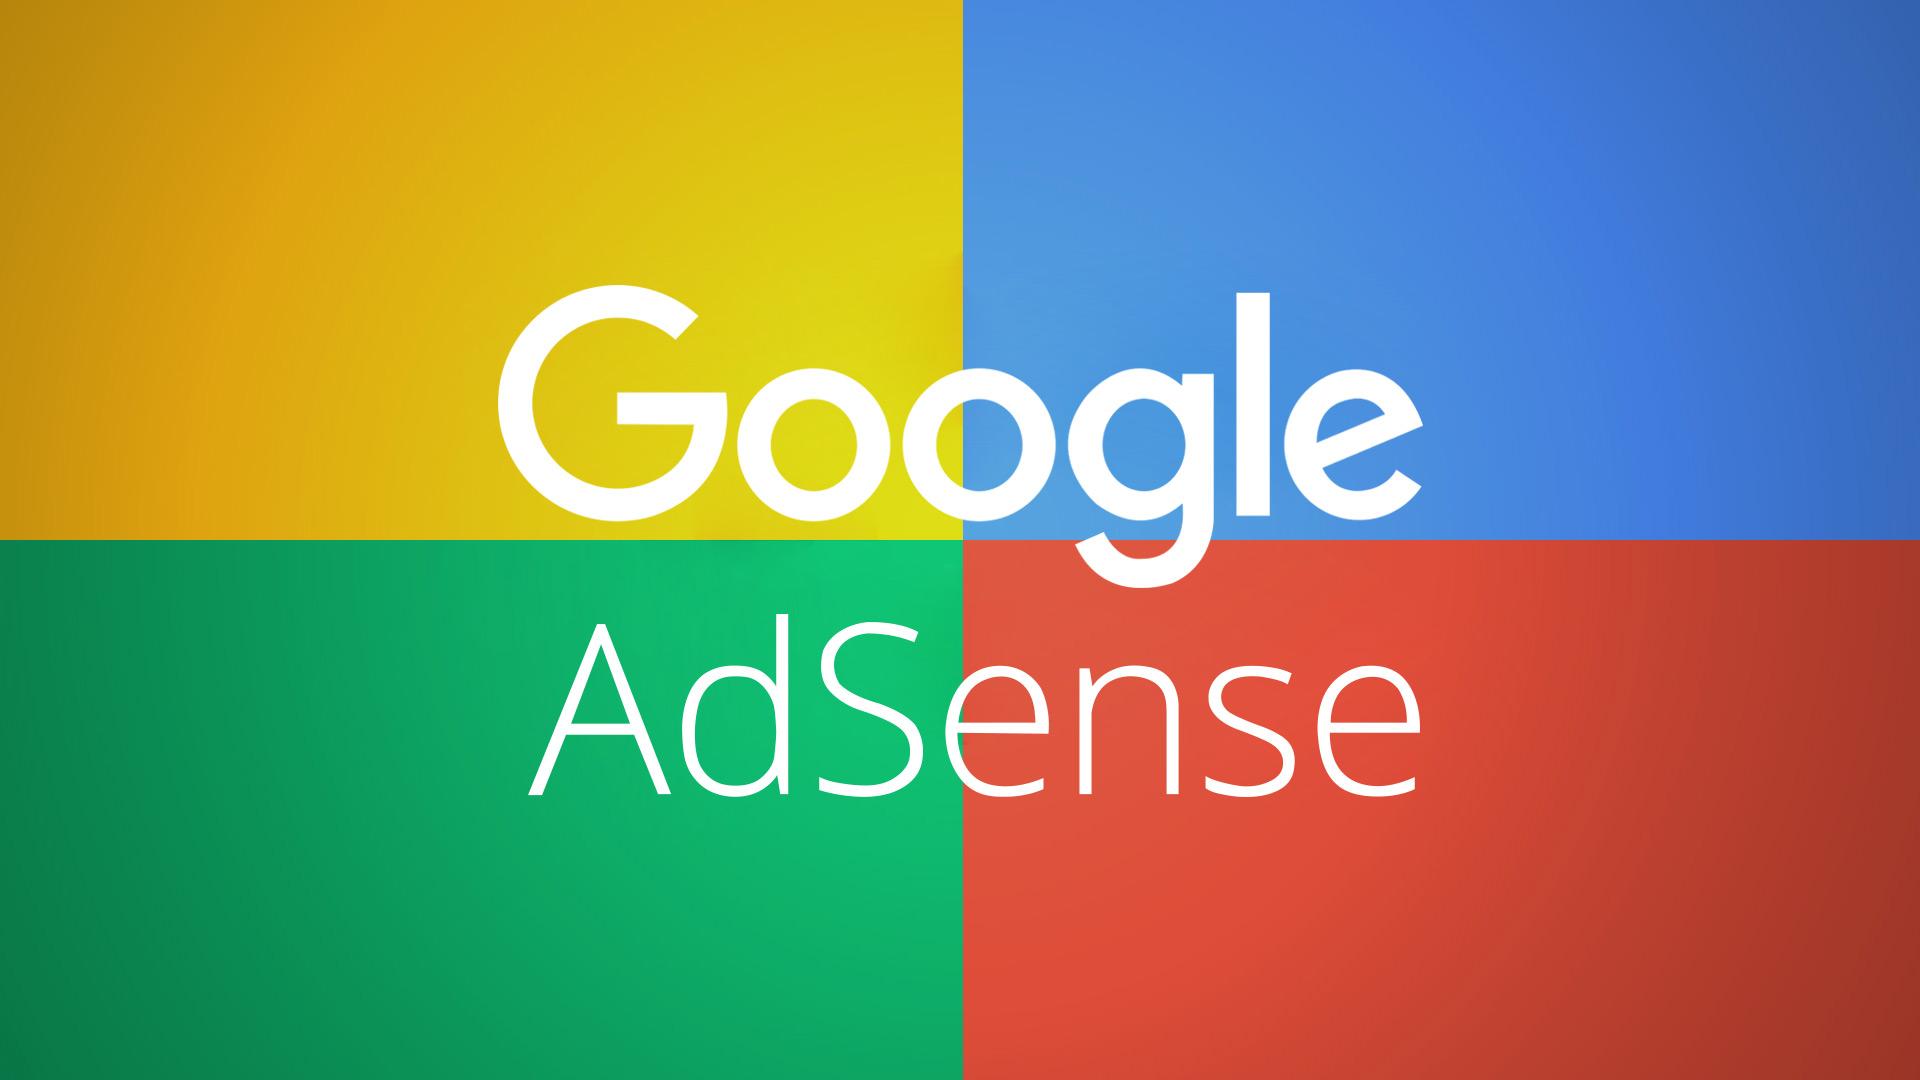 Google Adsense Logo - Google Adsense Logo 1920 New